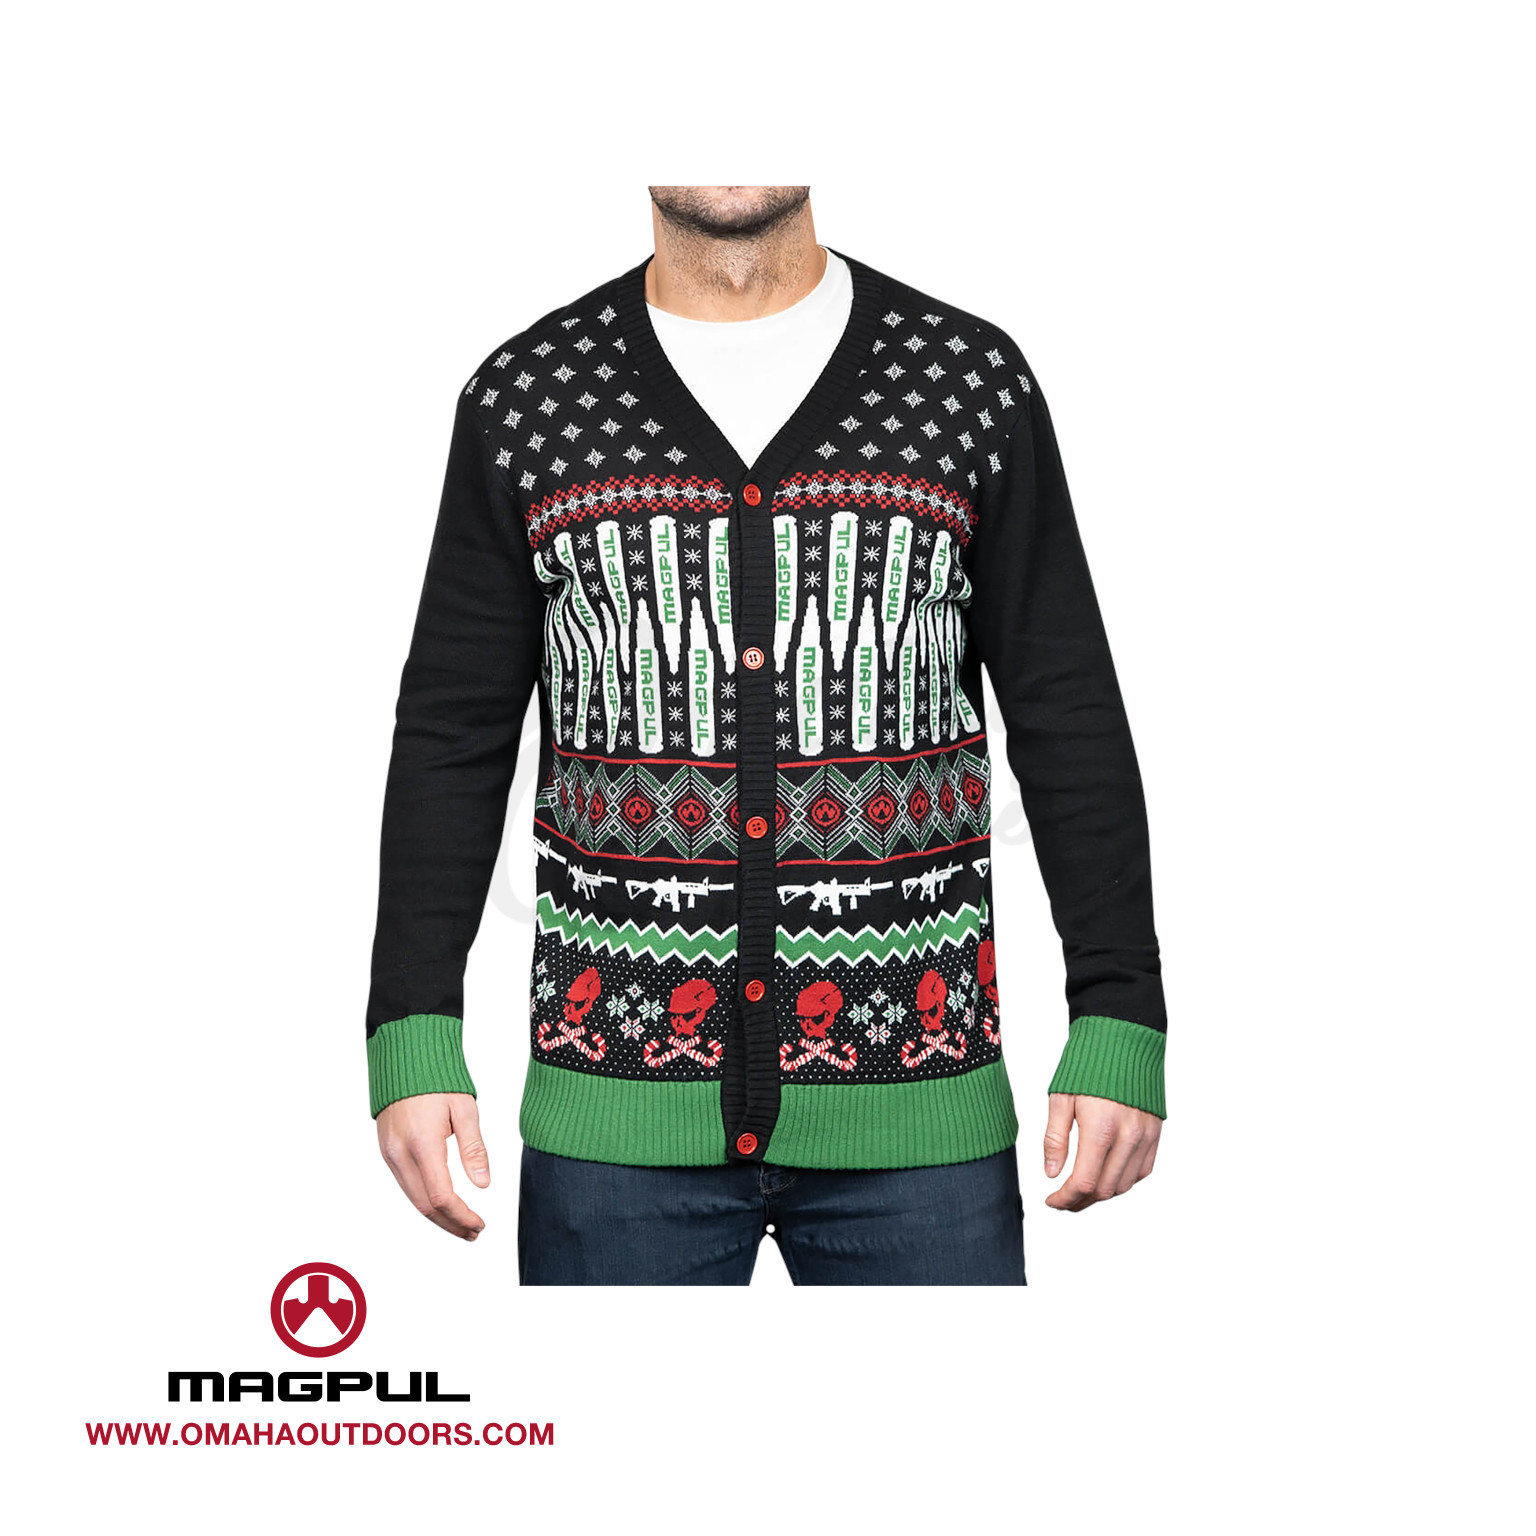 840815139546 Magpul Ugly Christmas Sweater Medium Omaha Outdoors